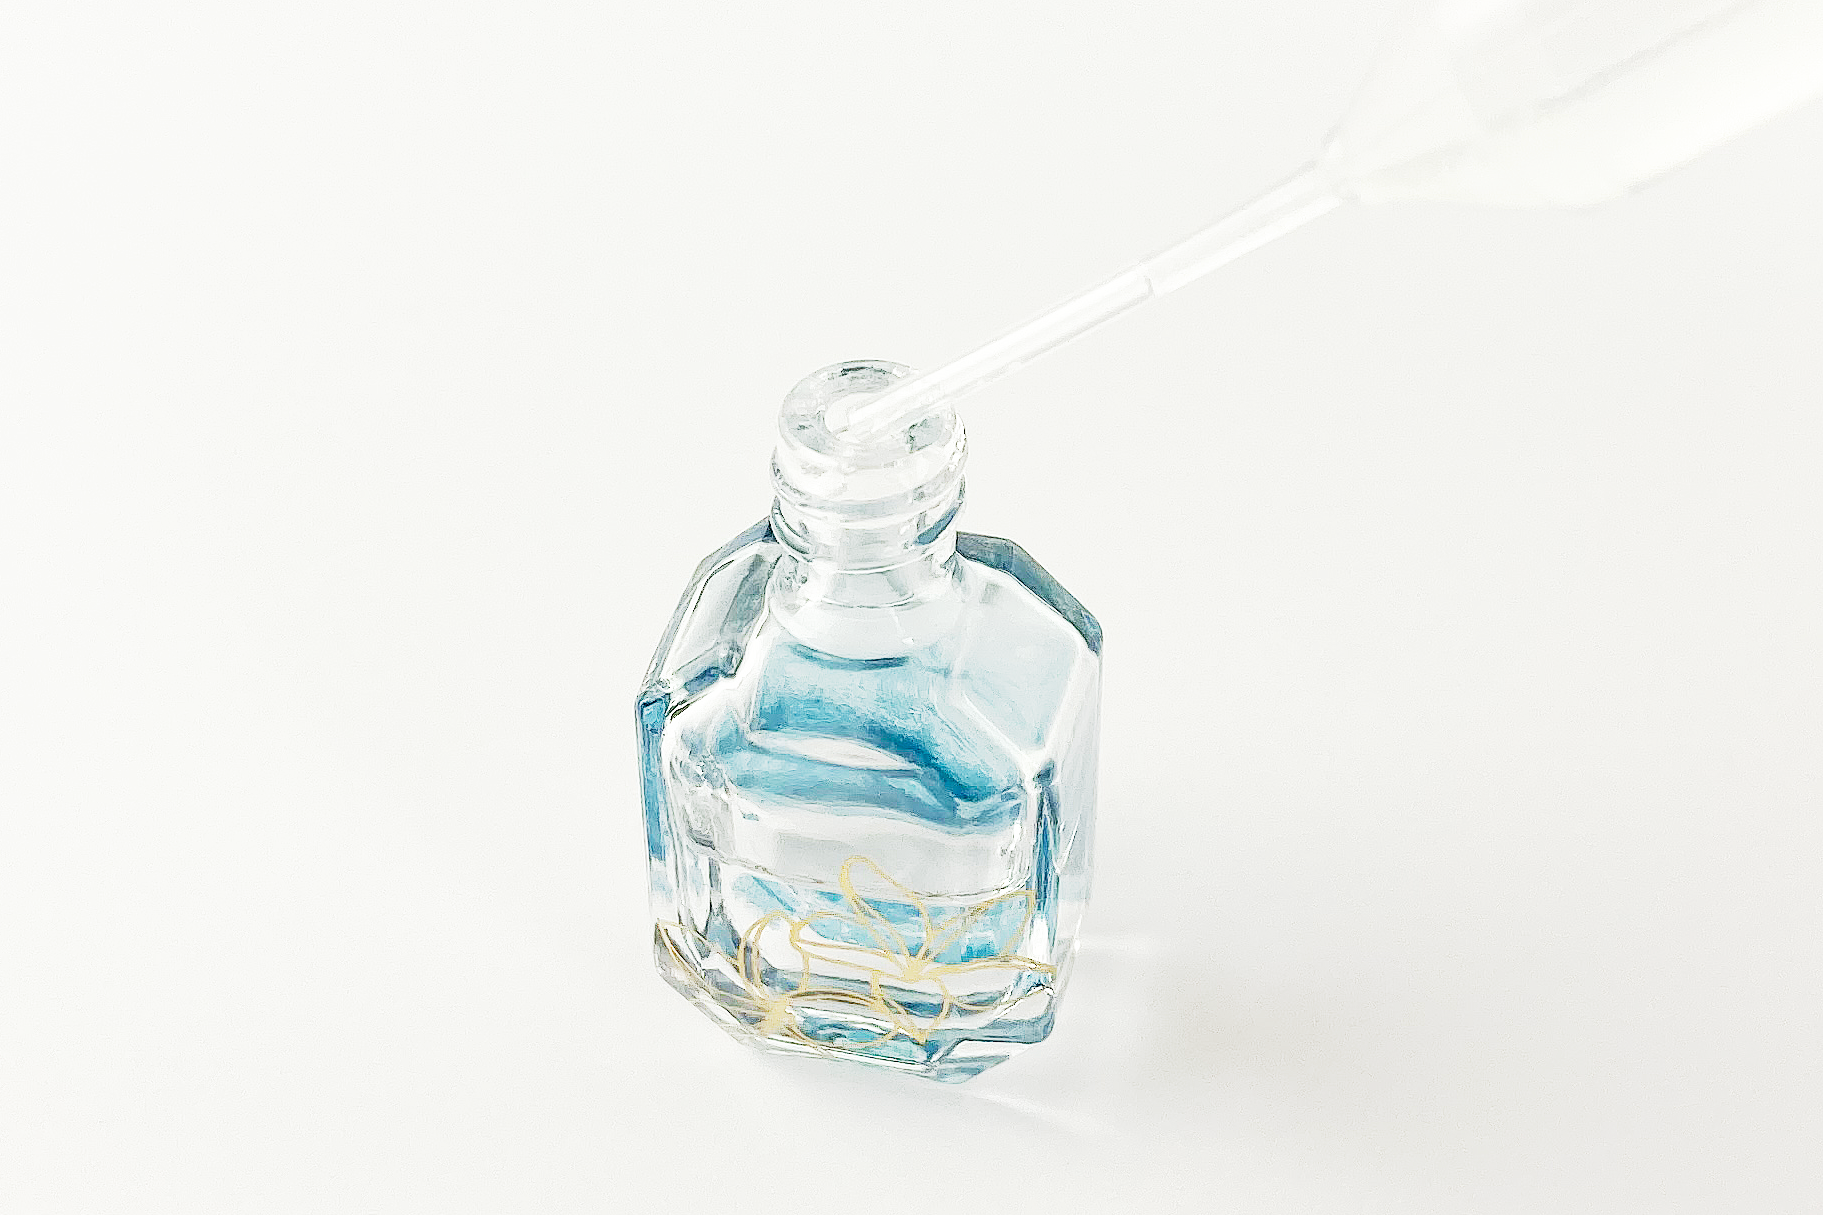 Dearest Fragrance－Luminousルミナス